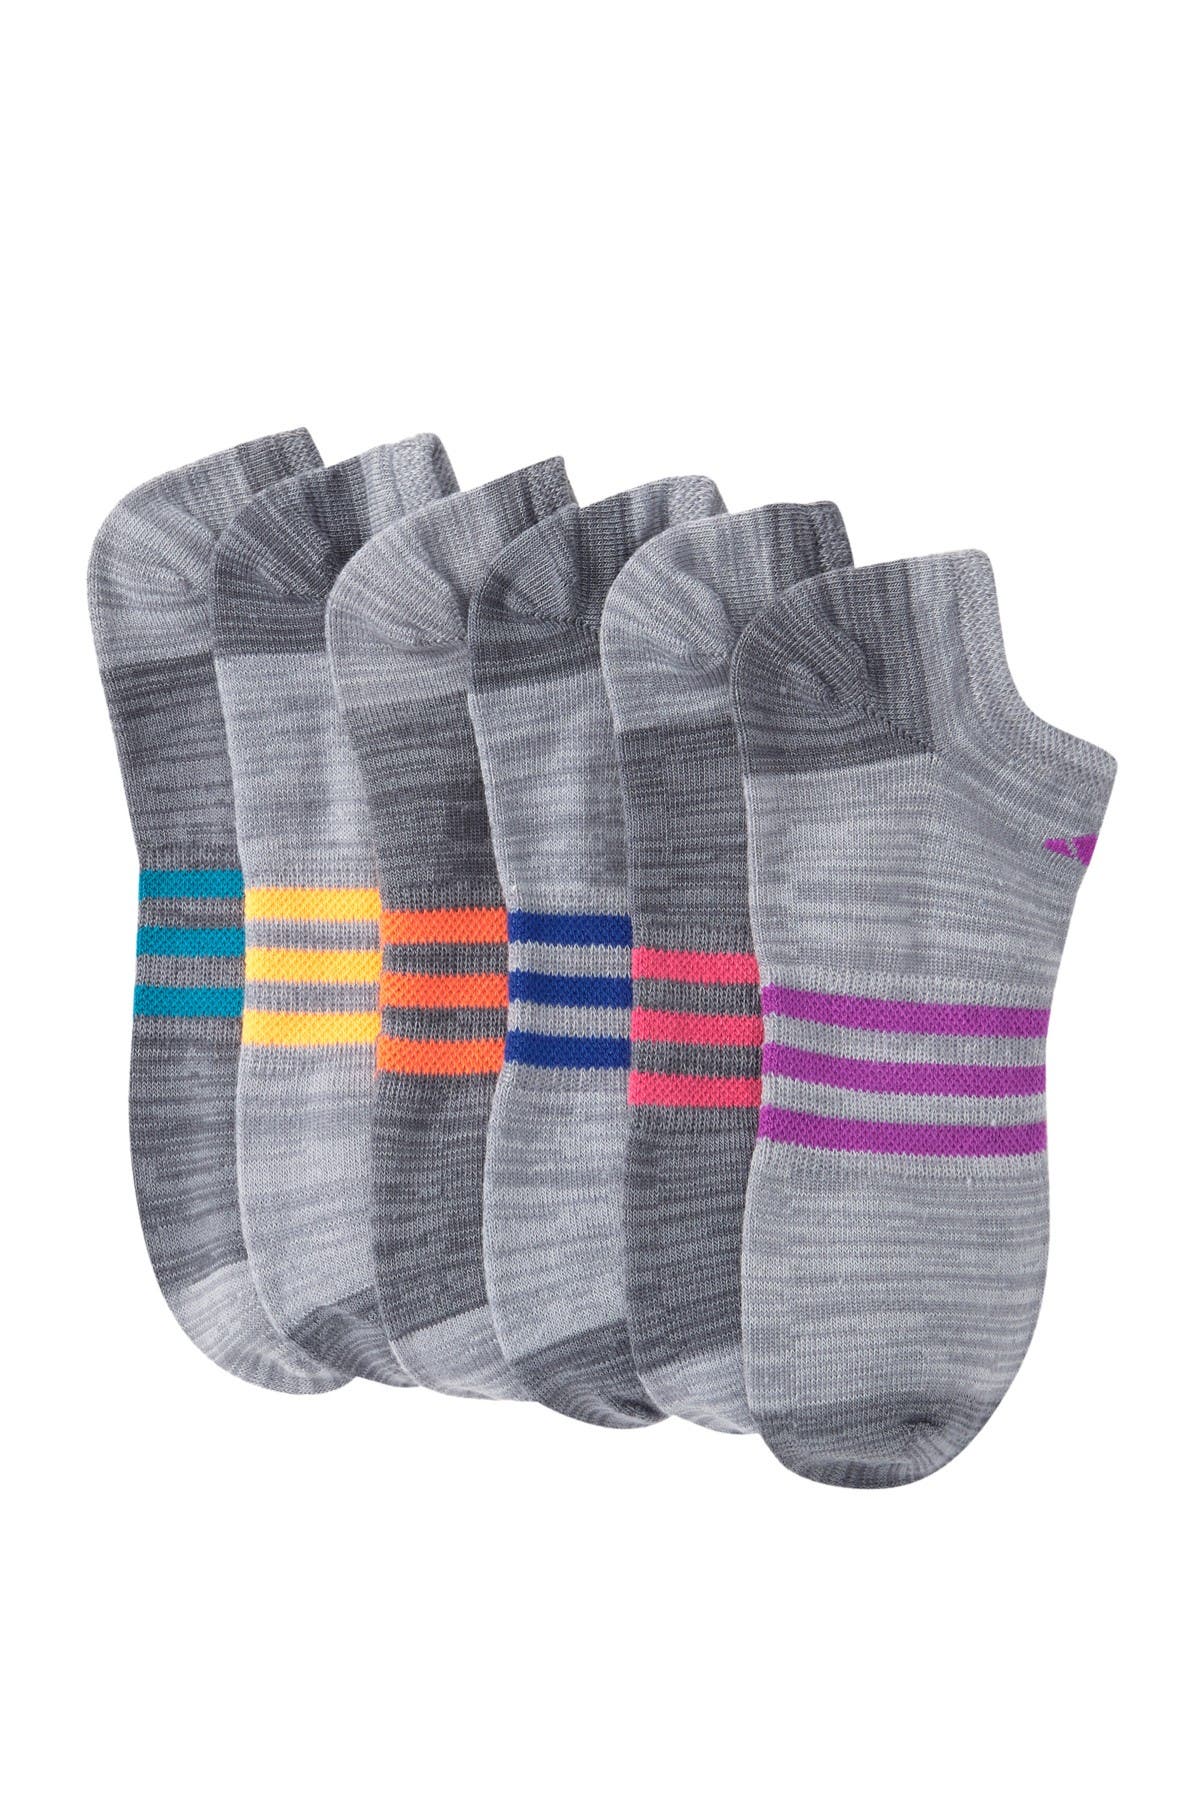 adidas superlite compression socks